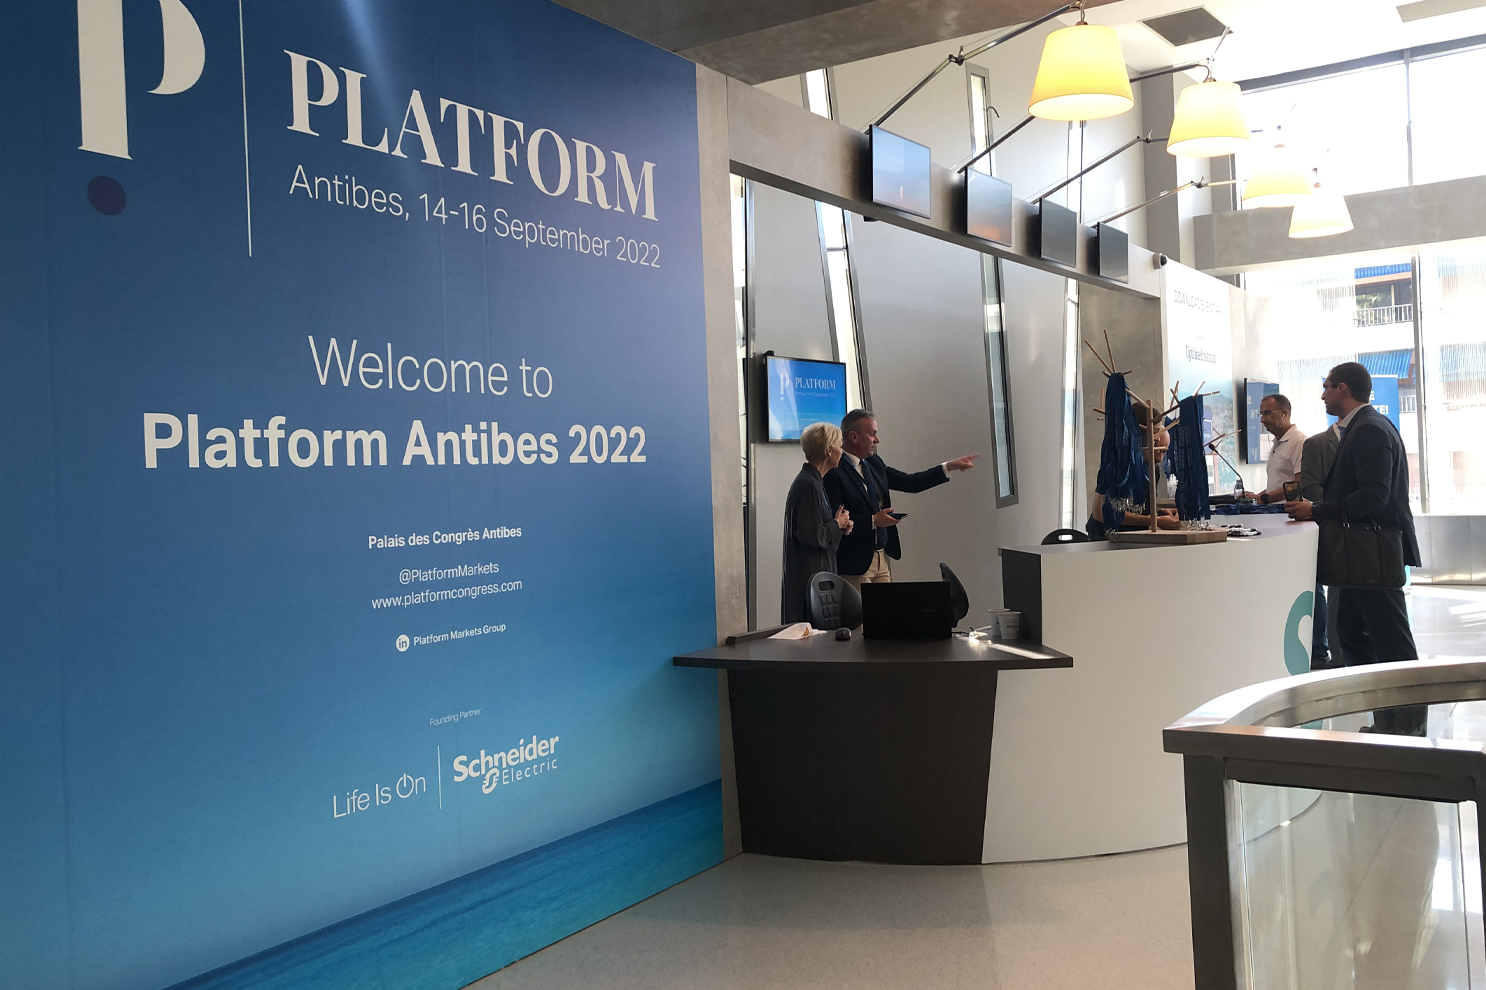 Platform Antibes